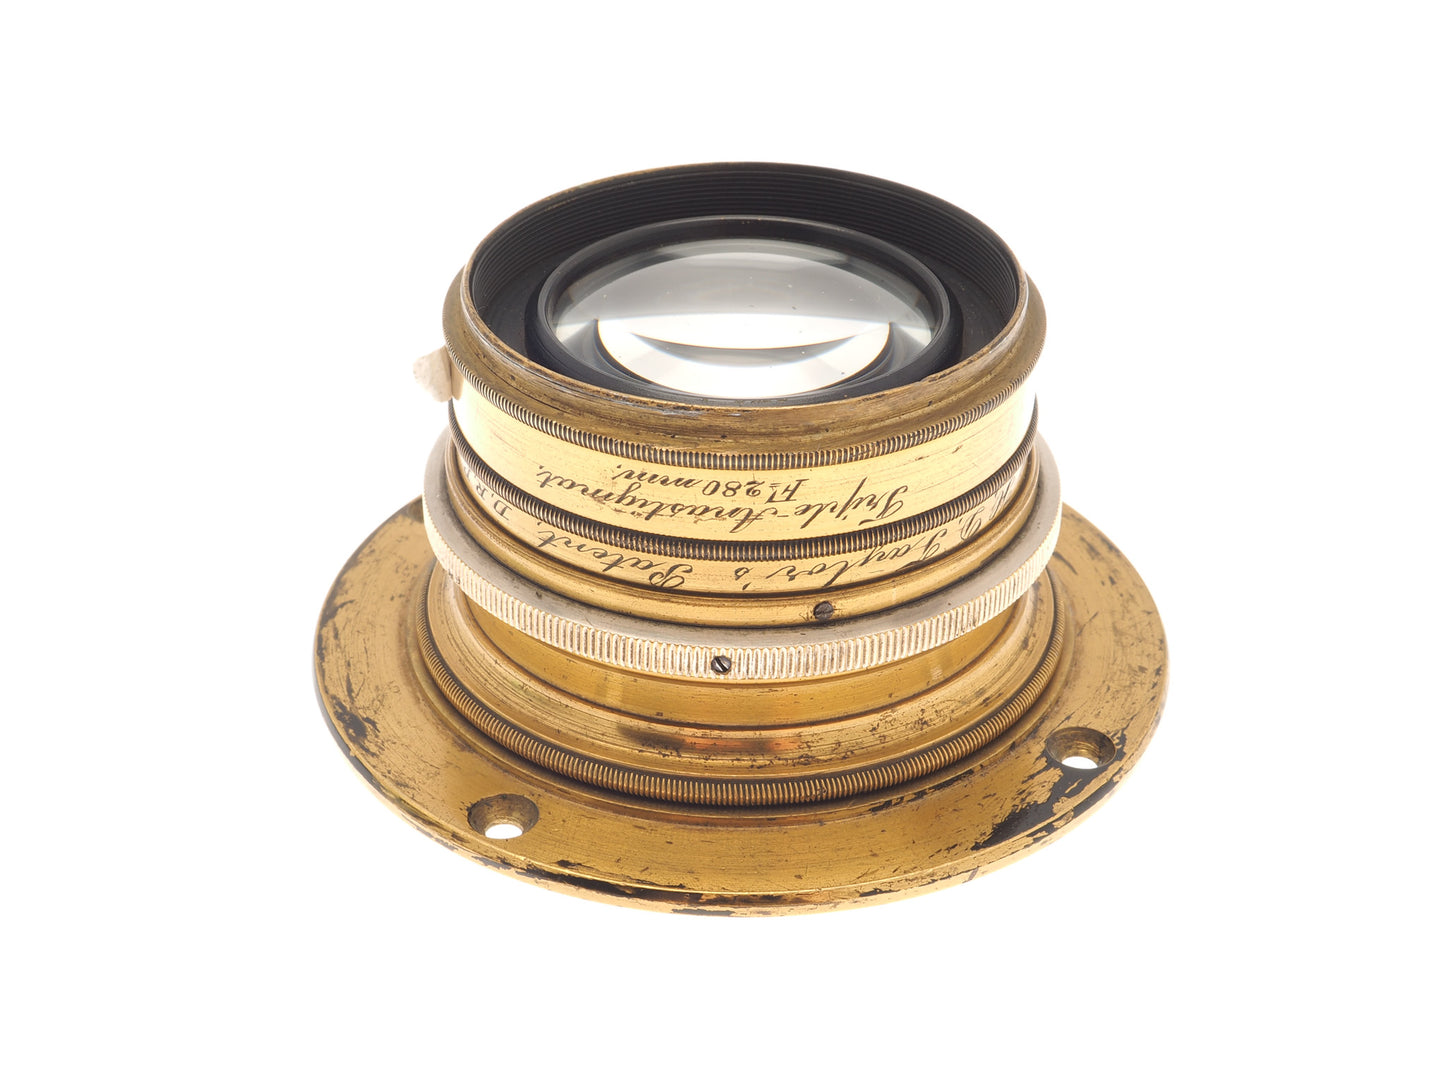 Voigtlander & Sons Braunschweig 280mm f7.7 Triple Anastigmat - Lens